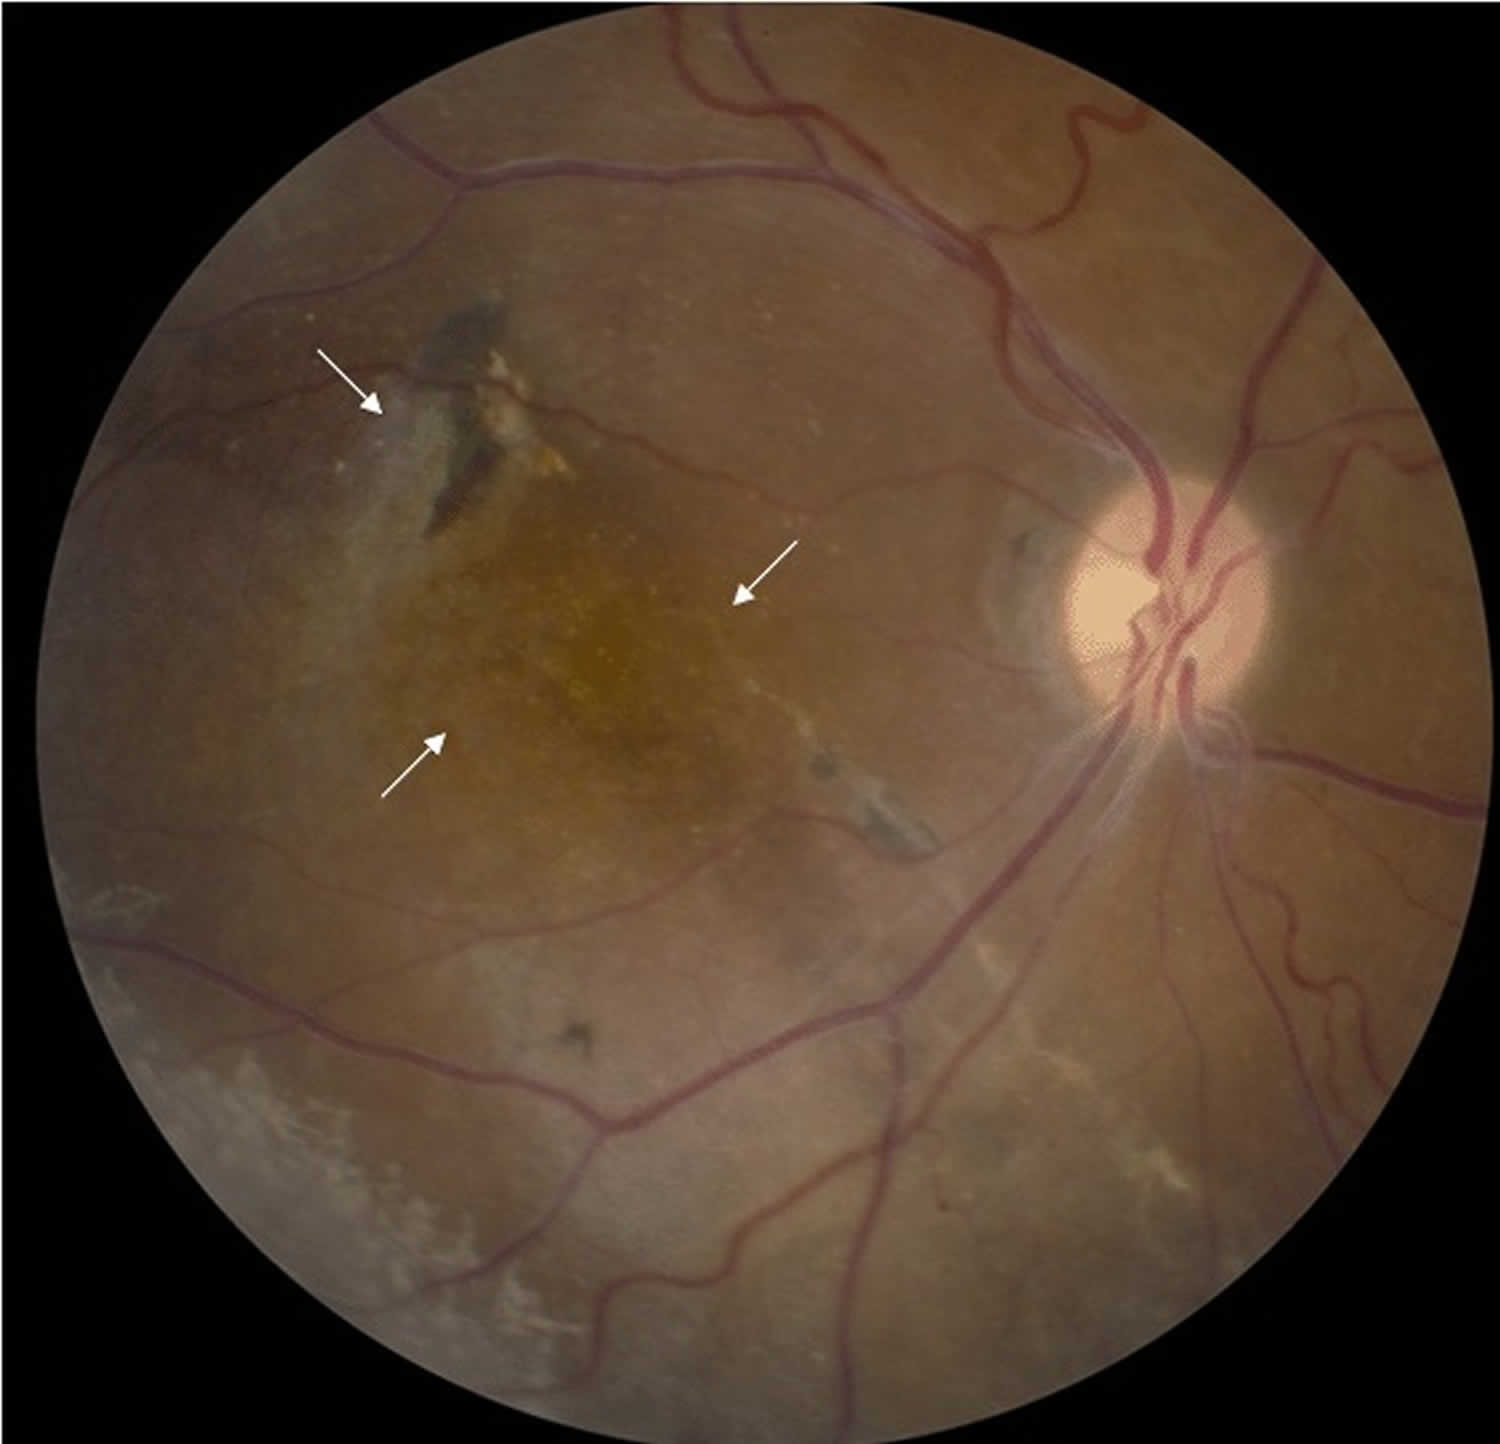 x-linked juvenile retinoschisis